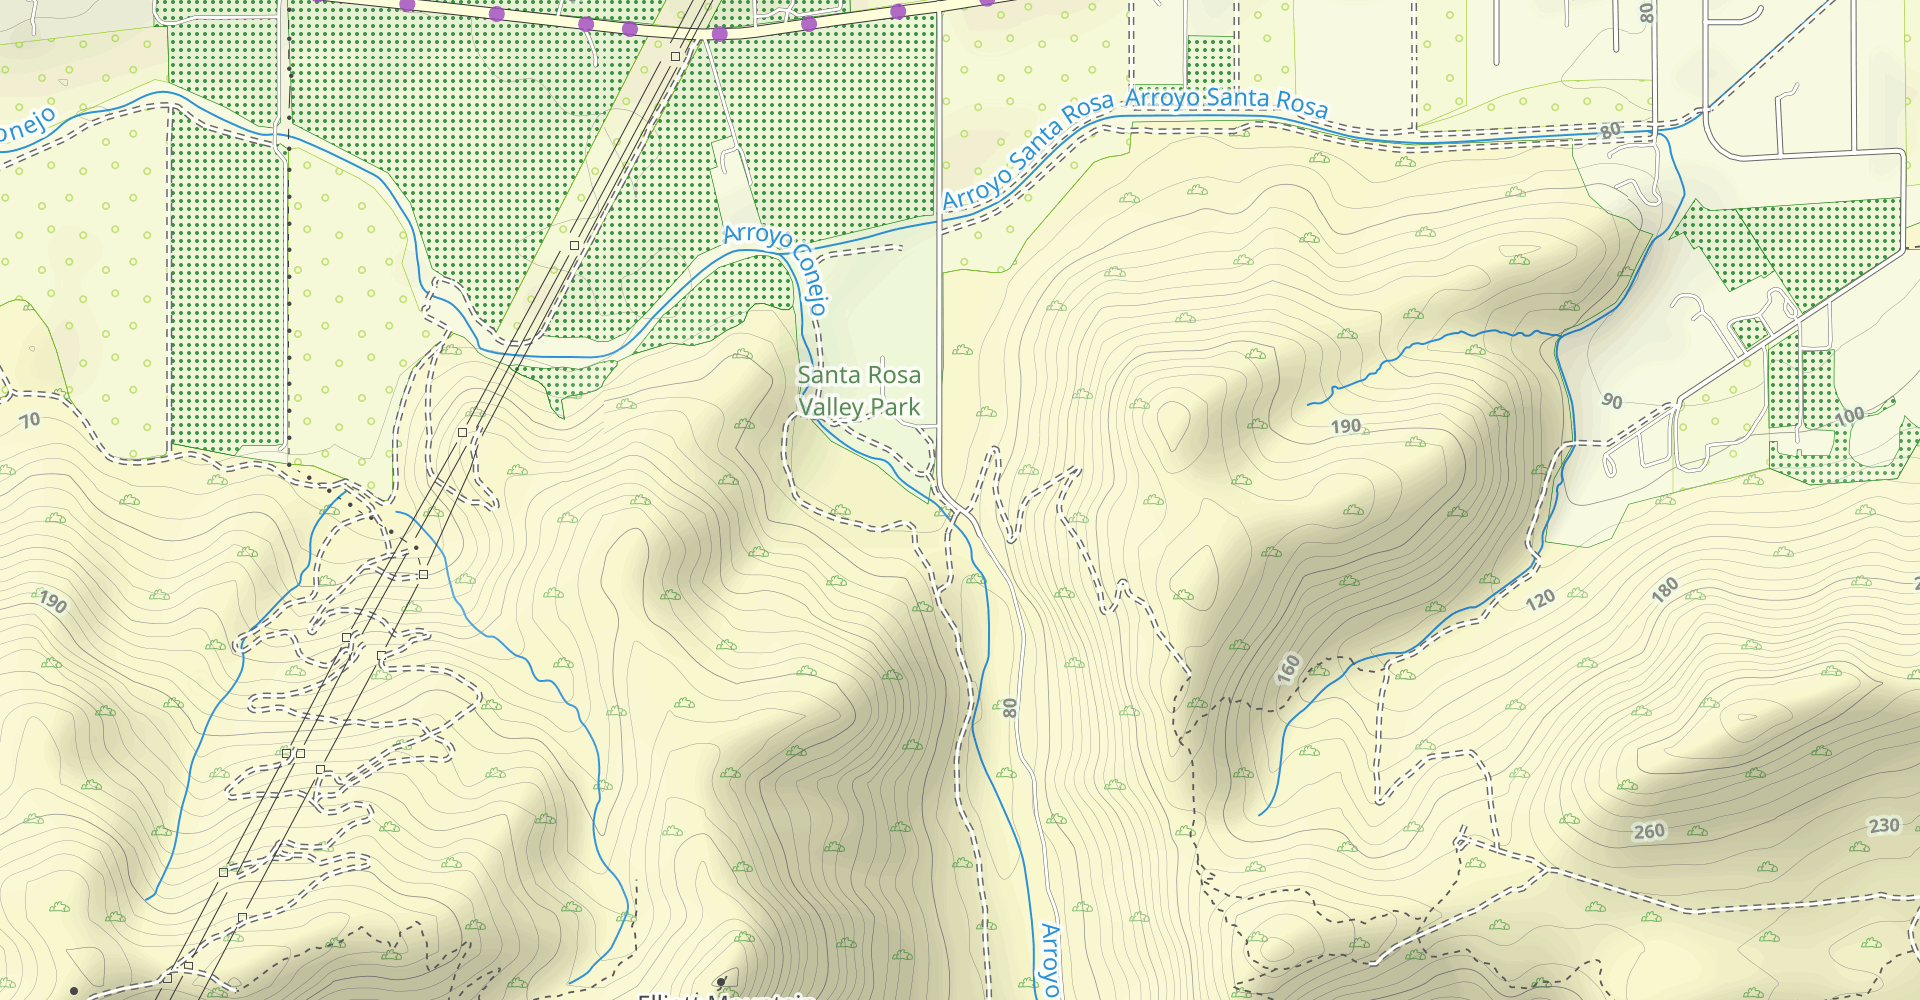 Western Plateau Trail and Hawk Canyon Trail Loop